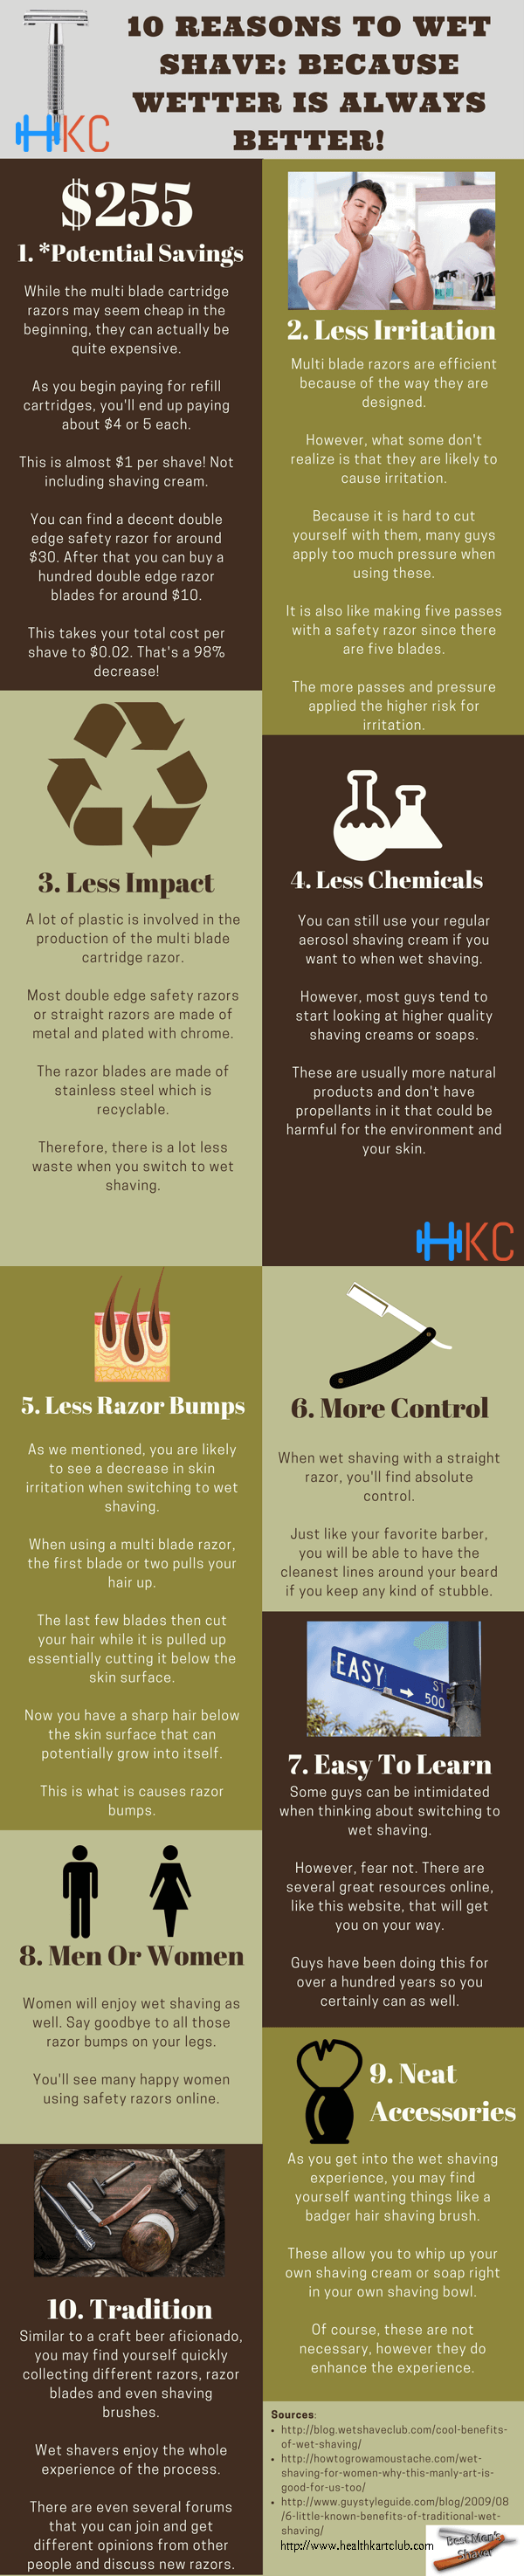 wet shaving benefits infographic